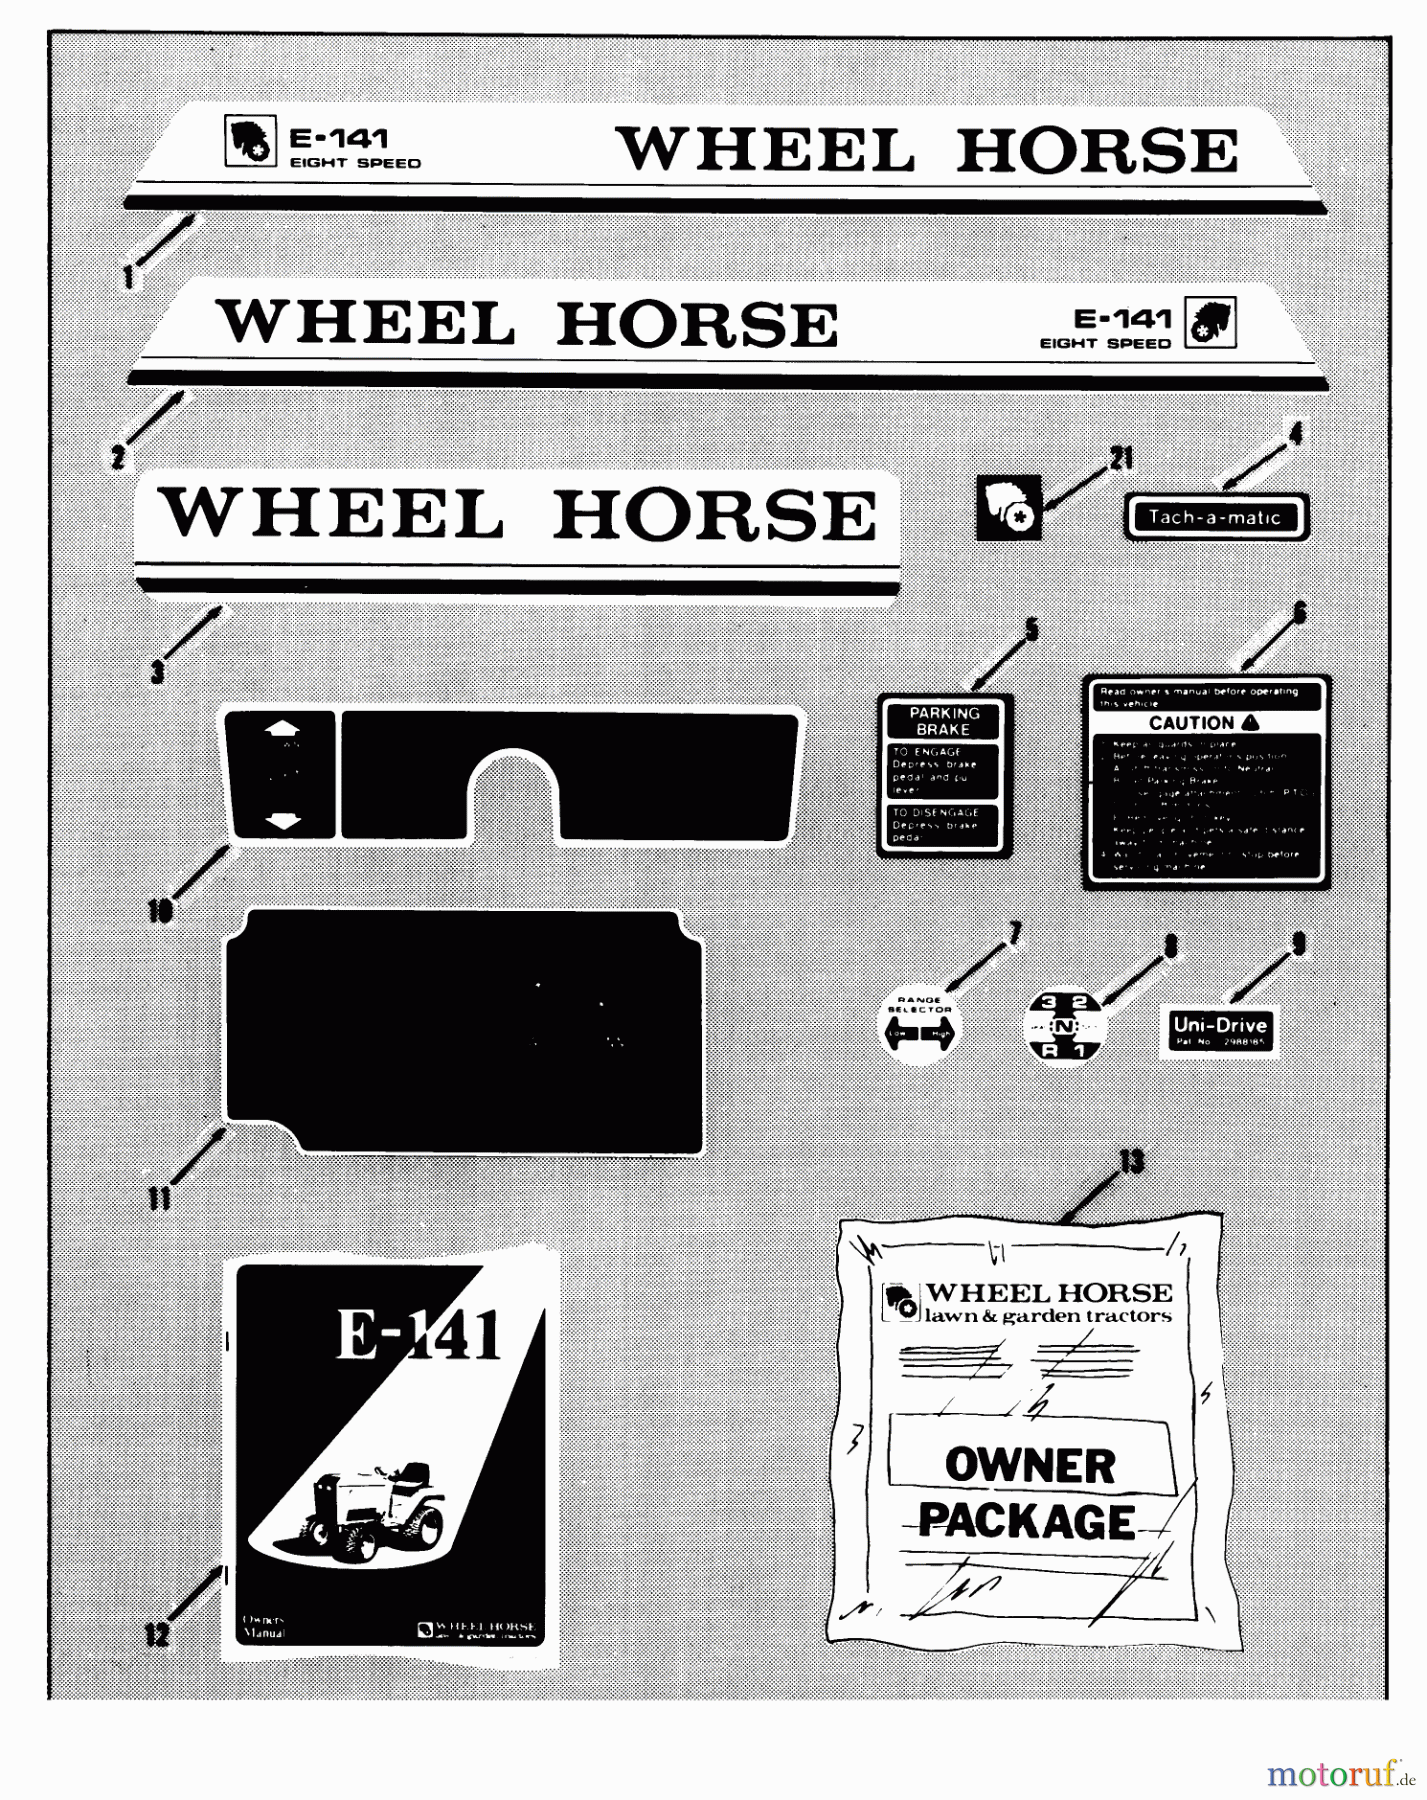  Toro Neu Mowers, Lawn & Garden Tractor Seite 1 01-14E801 (E-141) - Toro E-141 8-Speed Tractor, 1981 DECALS